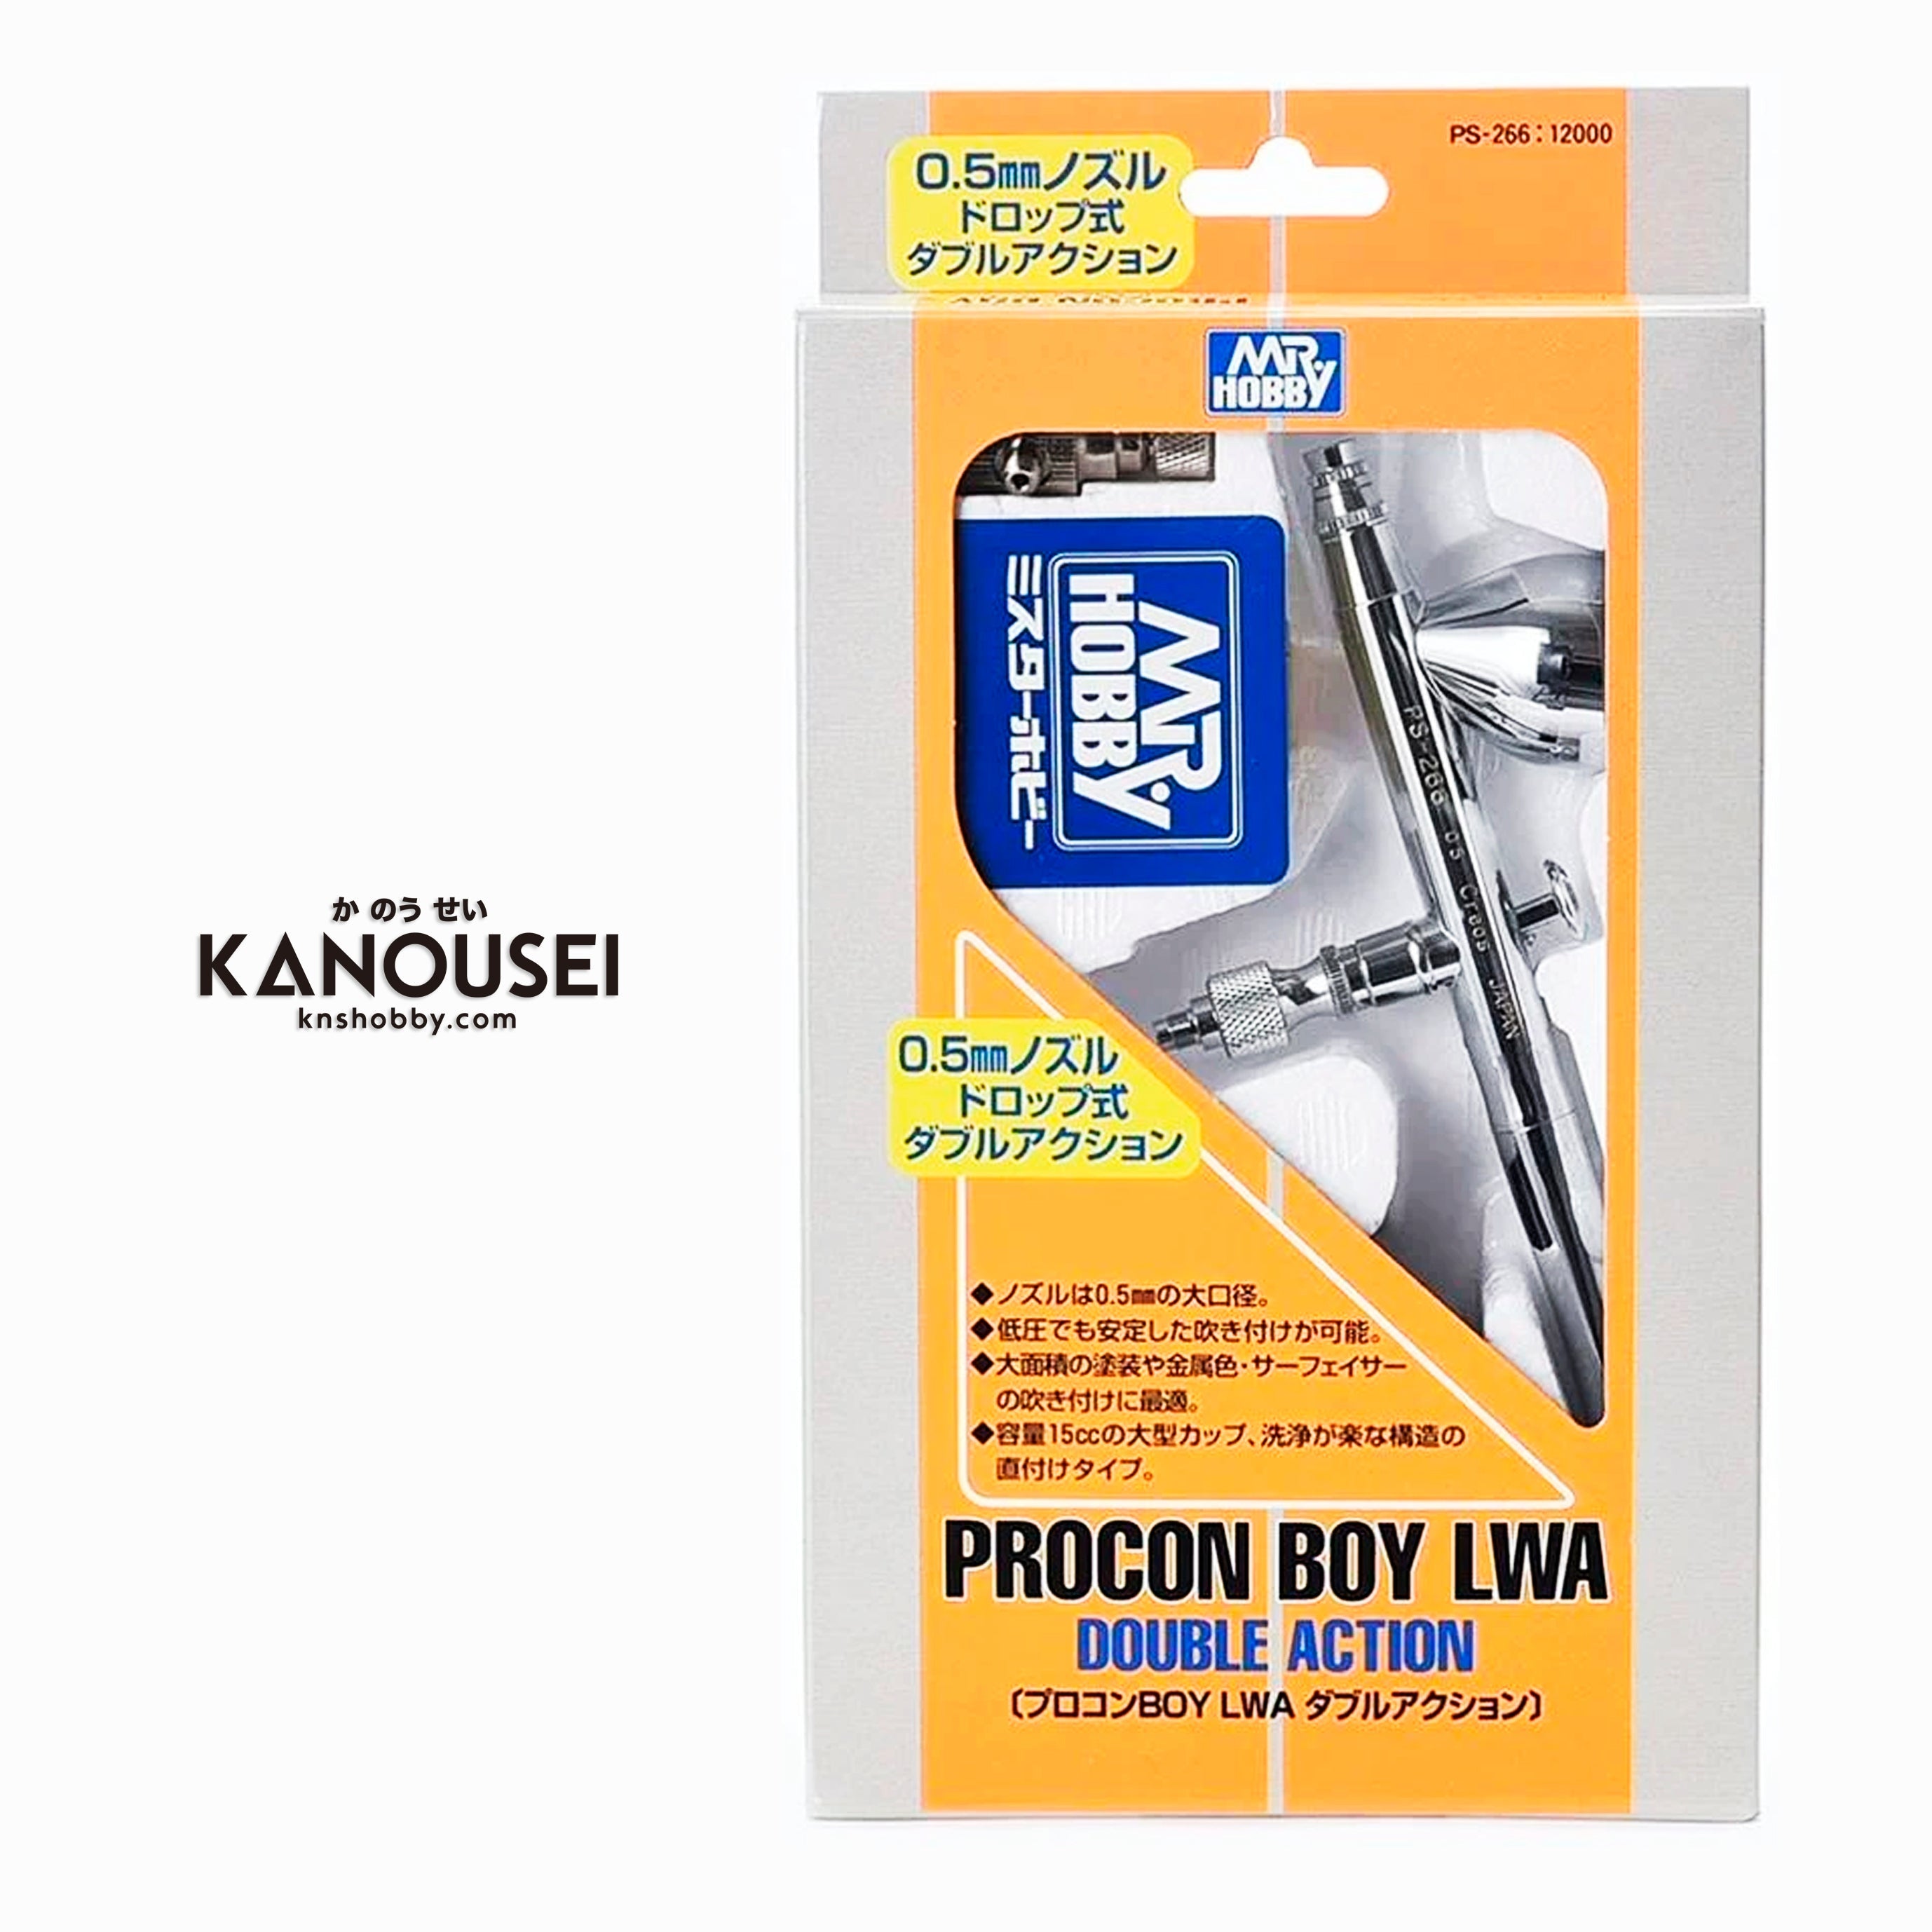 KNS Hobby PROCON BOY LWA Double Action 0.5 mm PS266 – KANOUSEI HOBBY